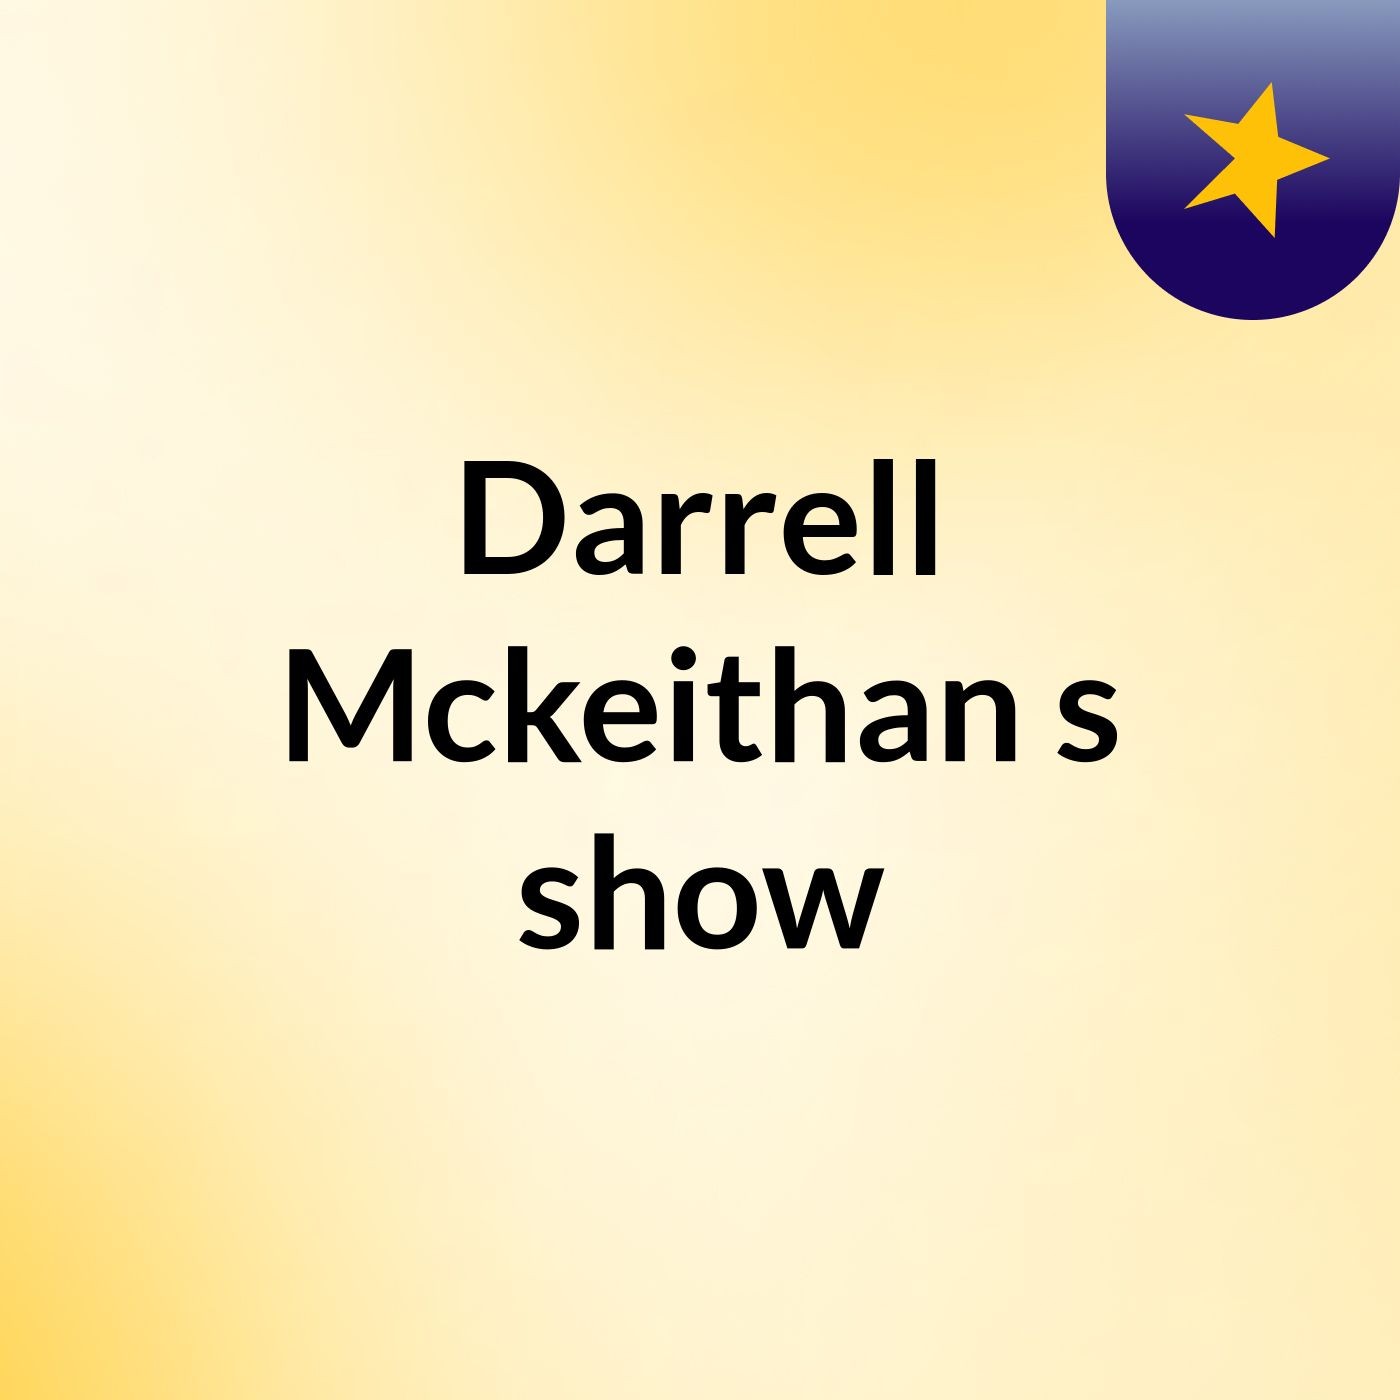 Episode 4 - Darrell Mckeithan's show